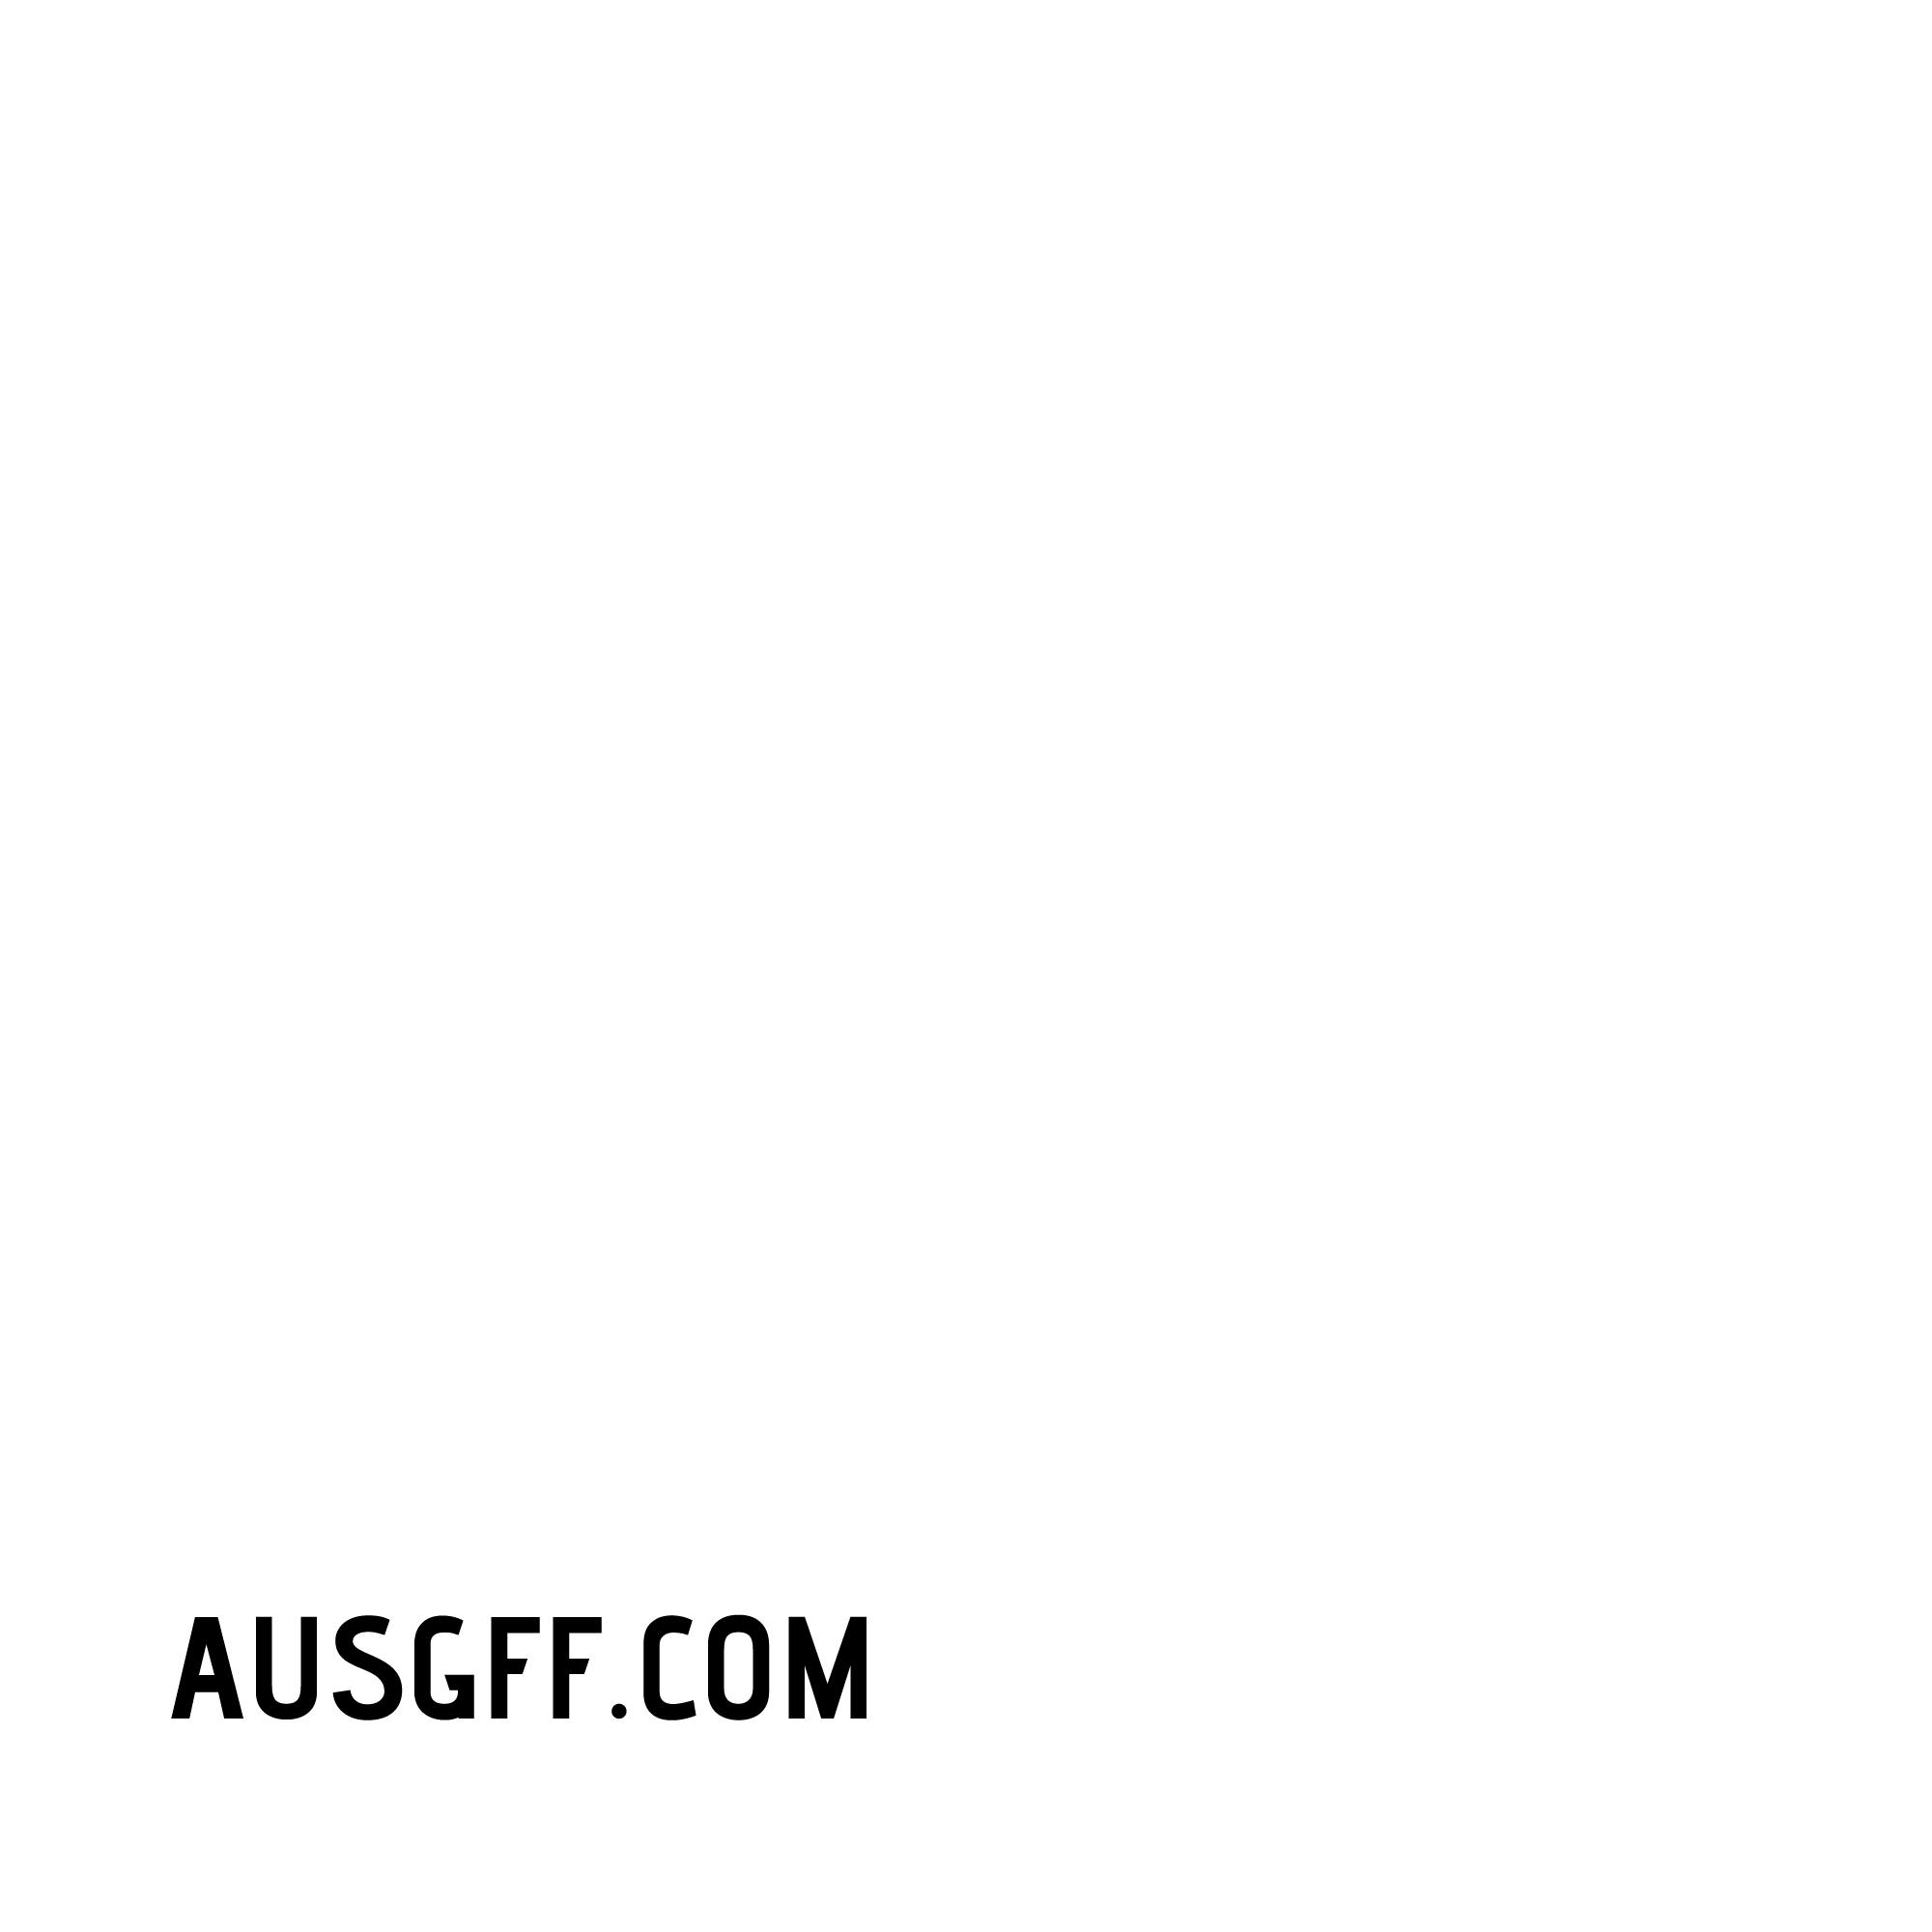 AUSGFF - Australia-Singapore Film Festival